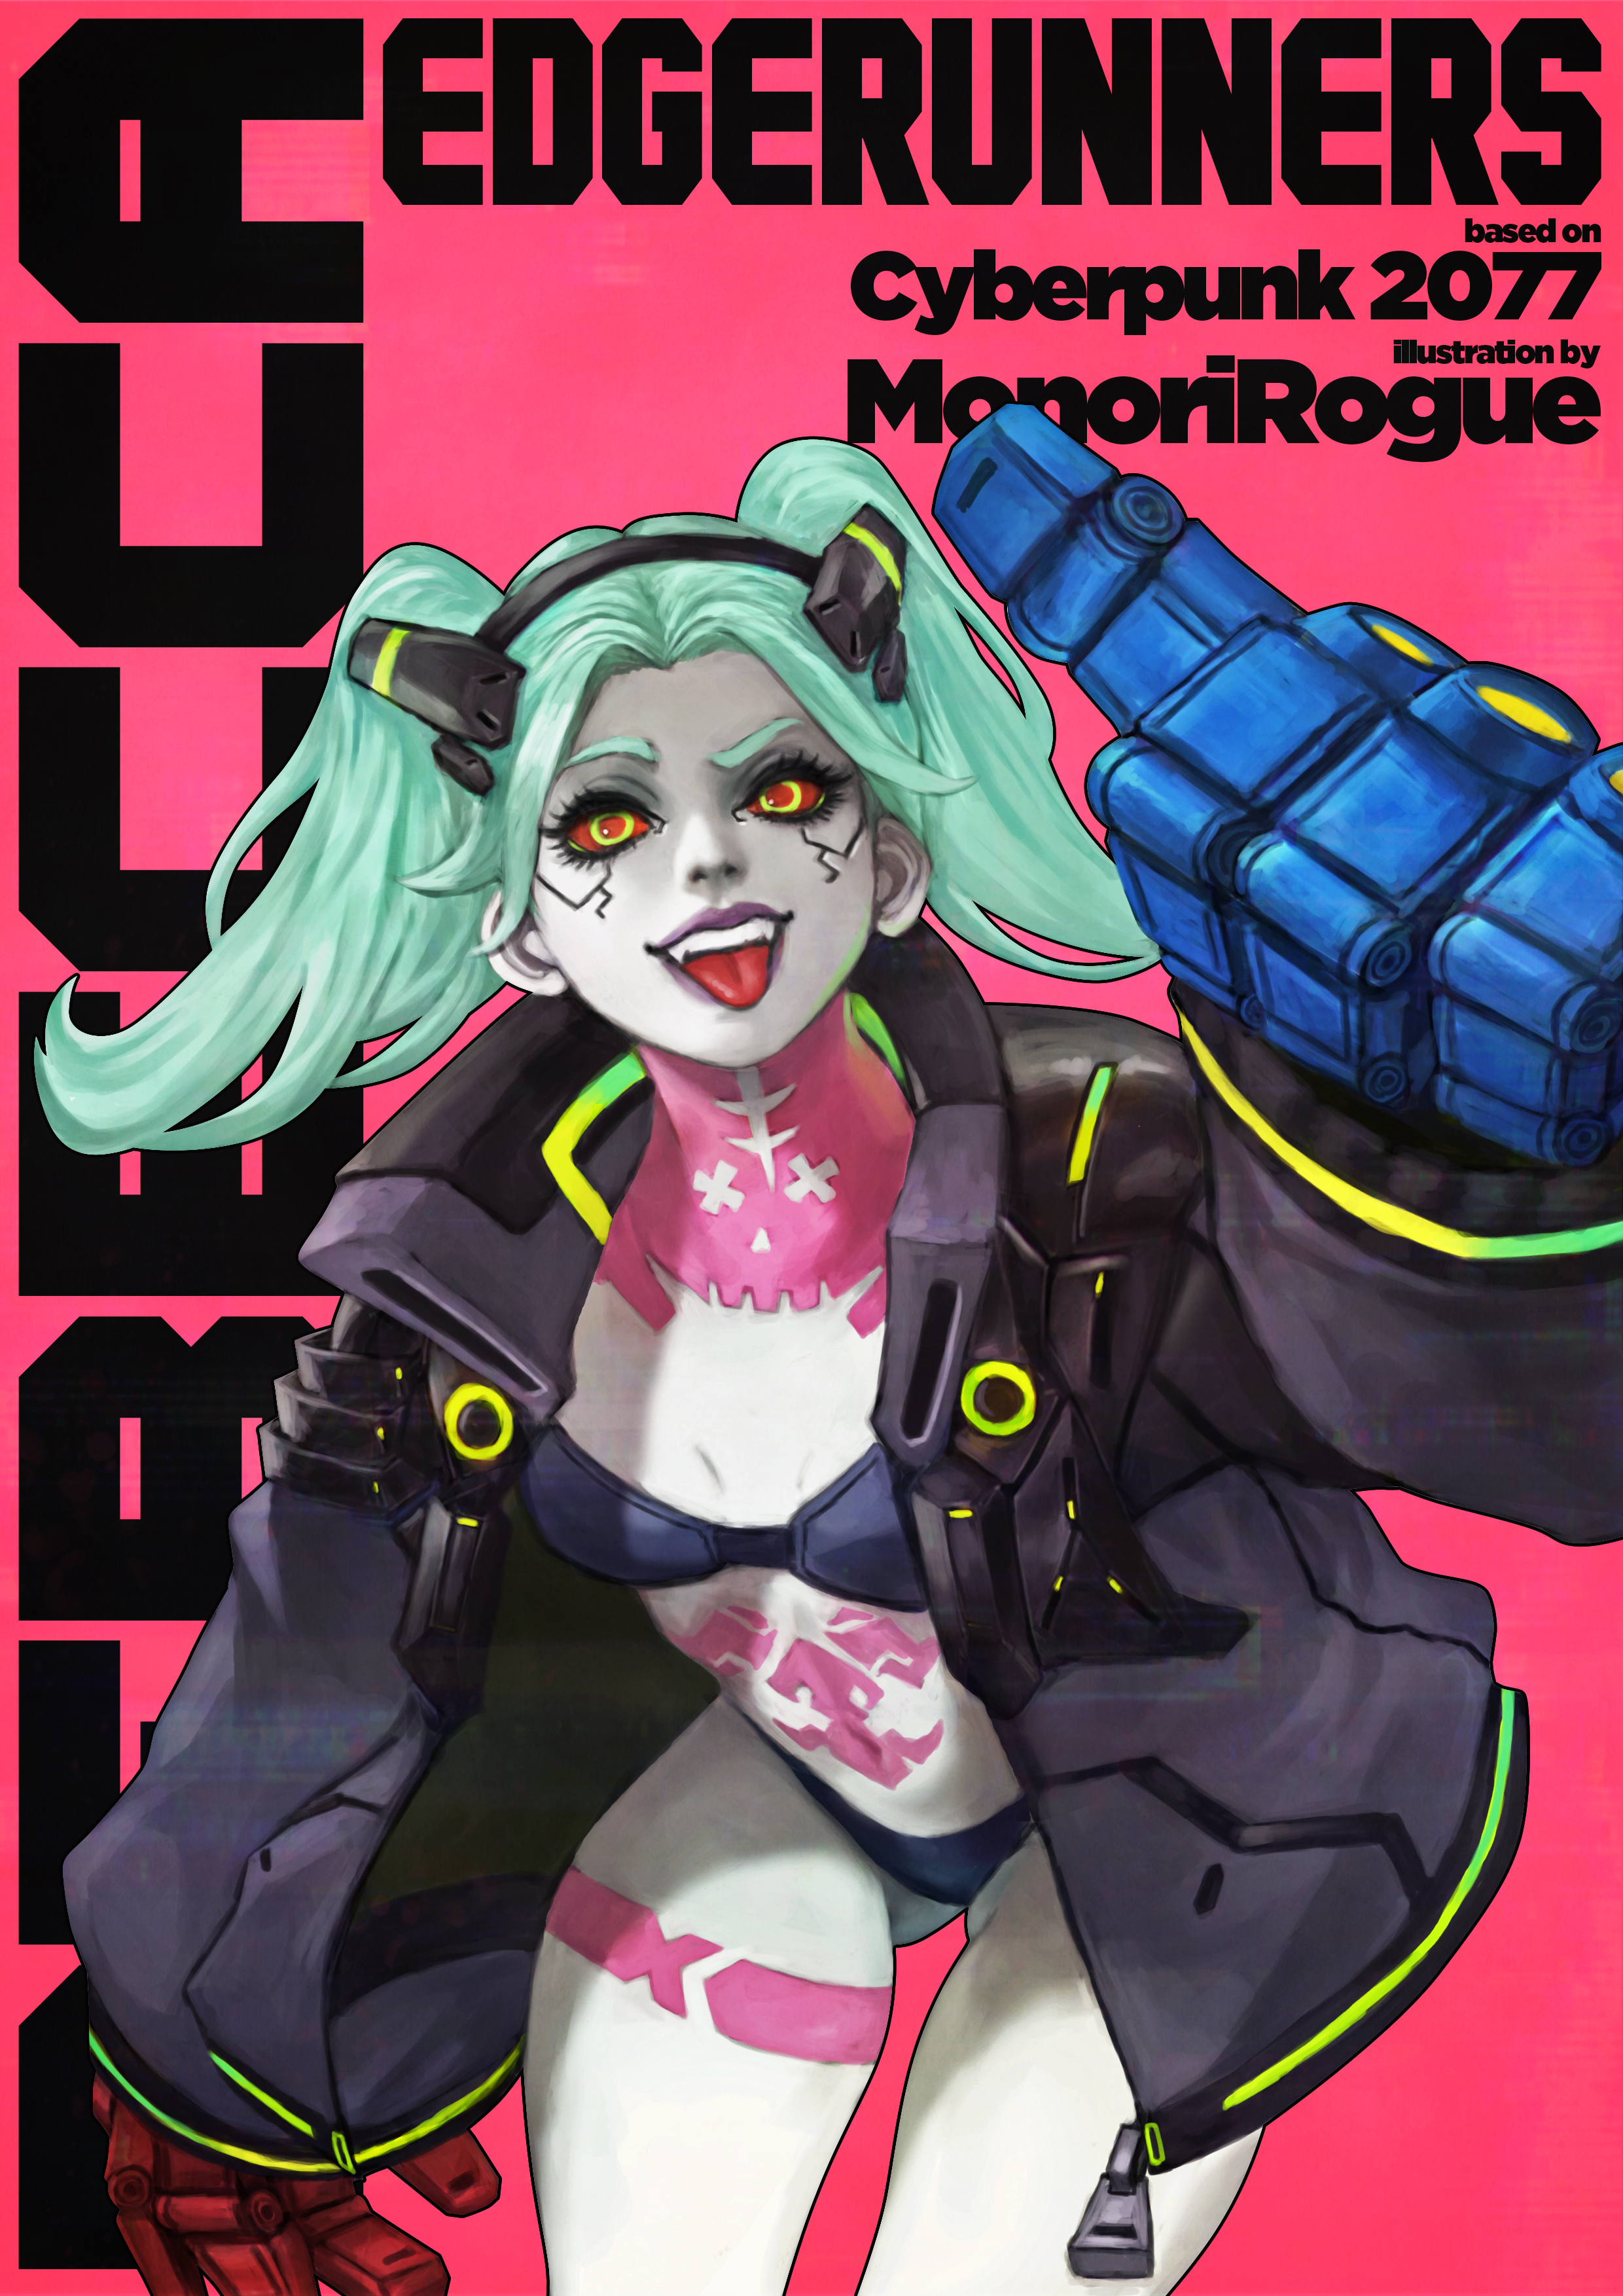 Rebecca - Cyberpunk: Edgerunners by Suoniko